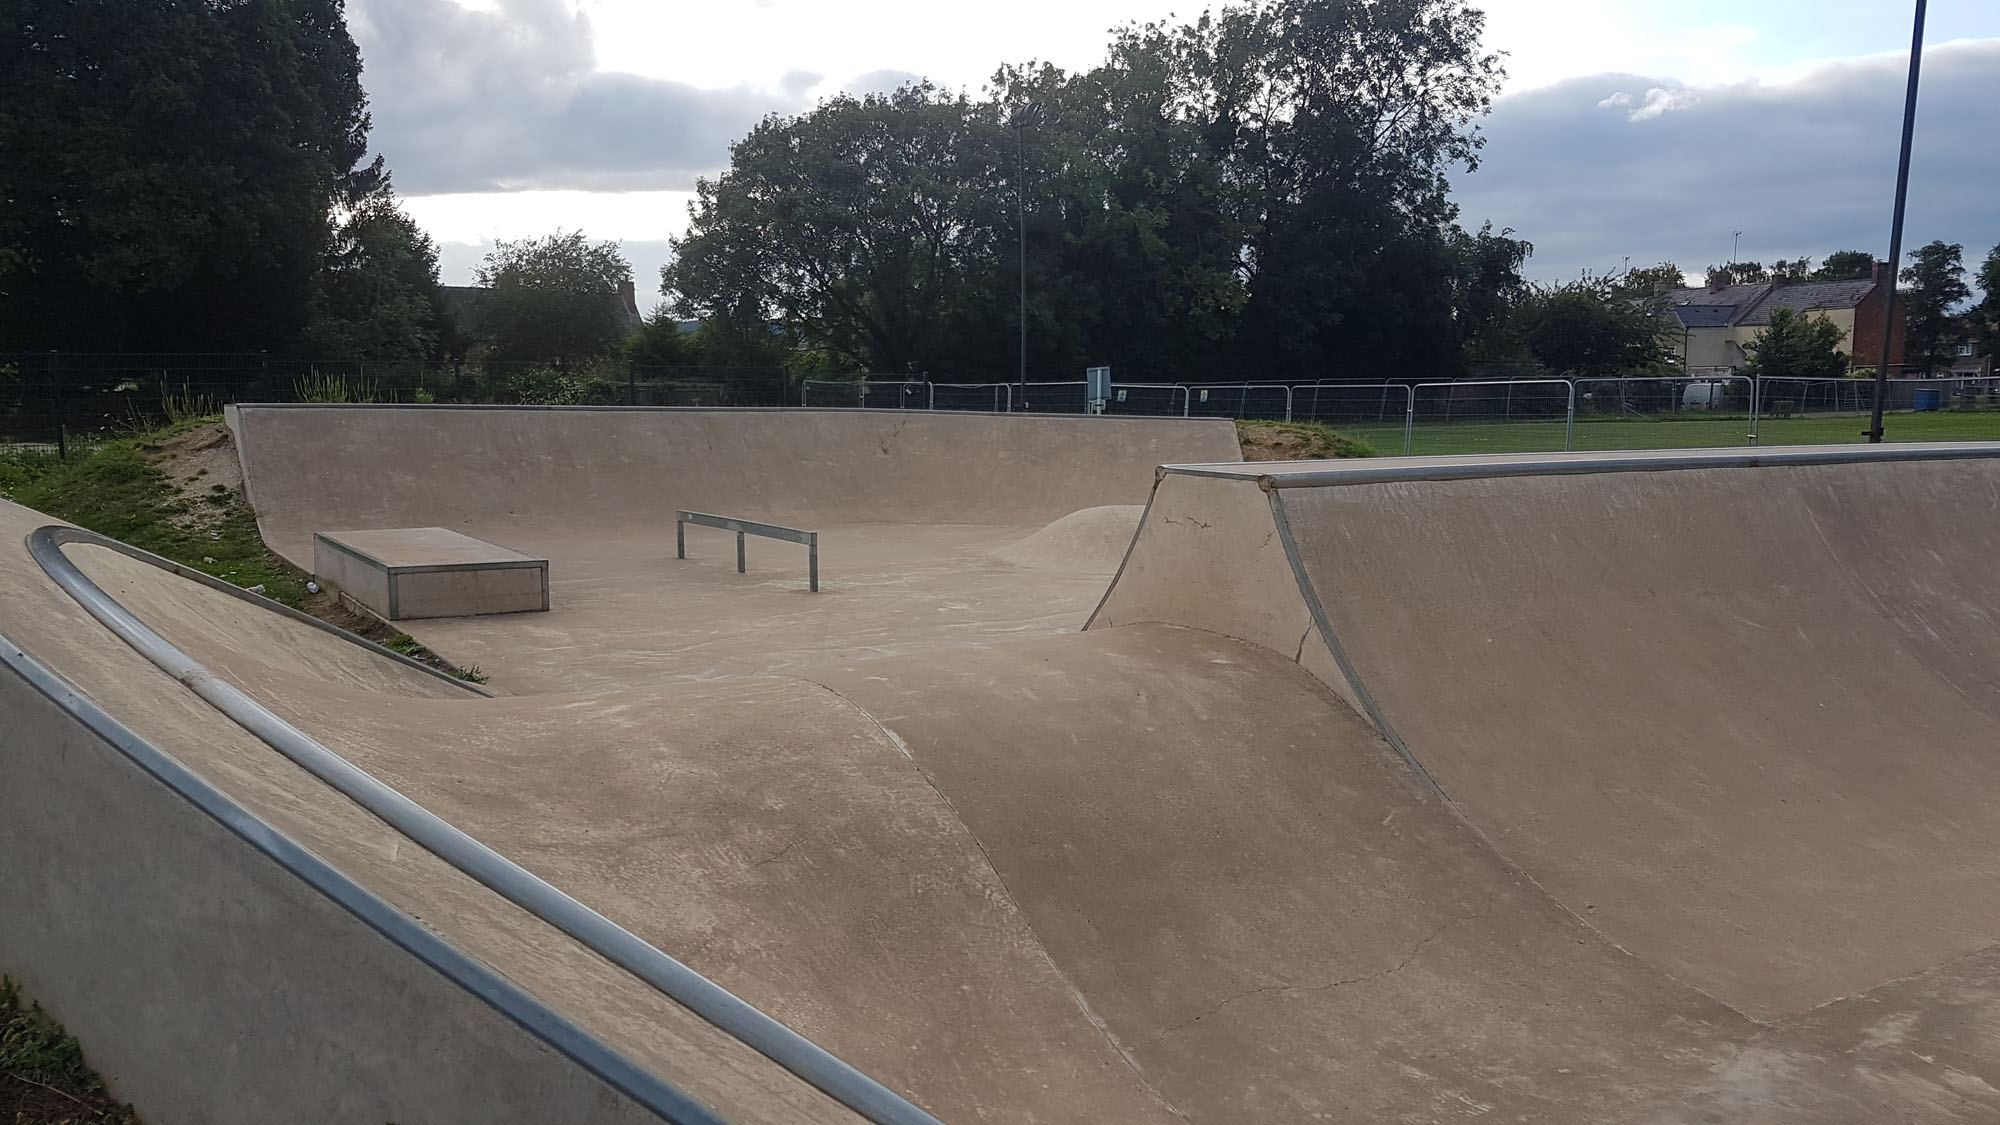 moreton in marsh skatepark review tips skateboarding in gloucestershire u k